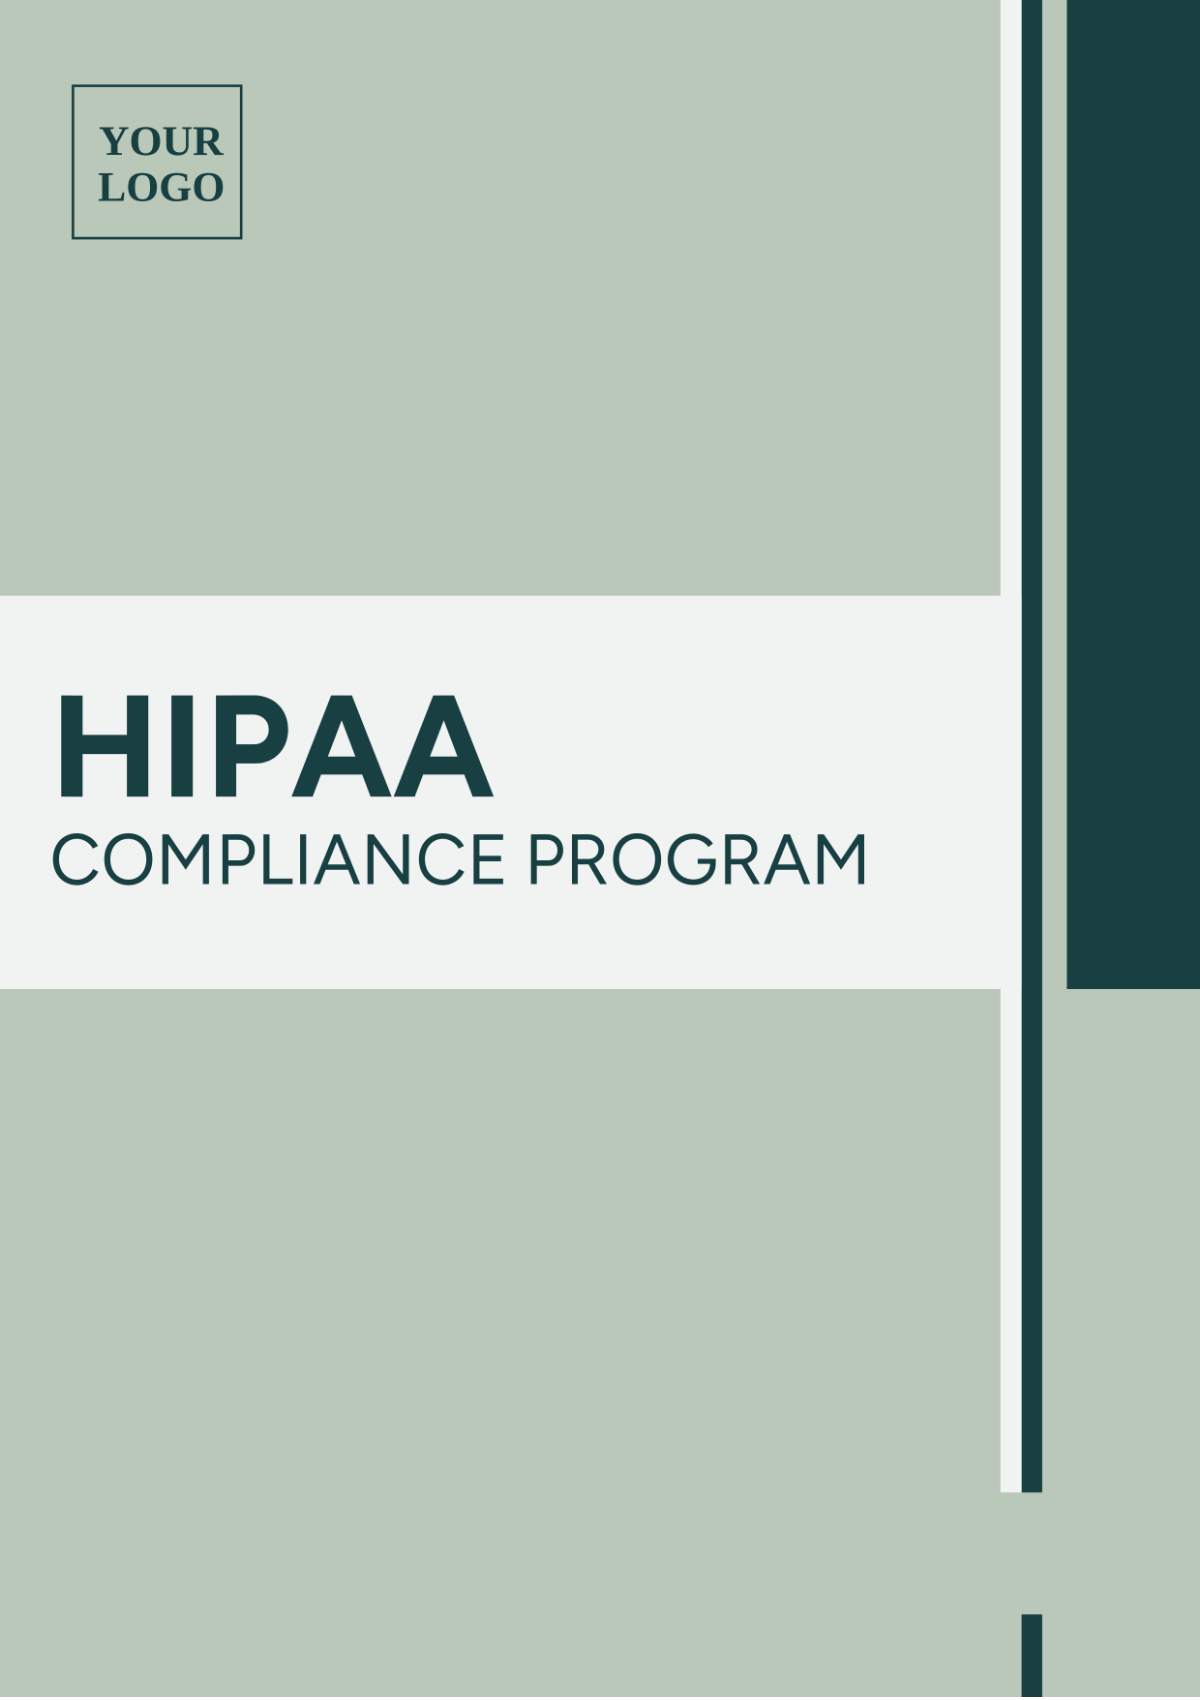 HIPAA Compliance Program Template